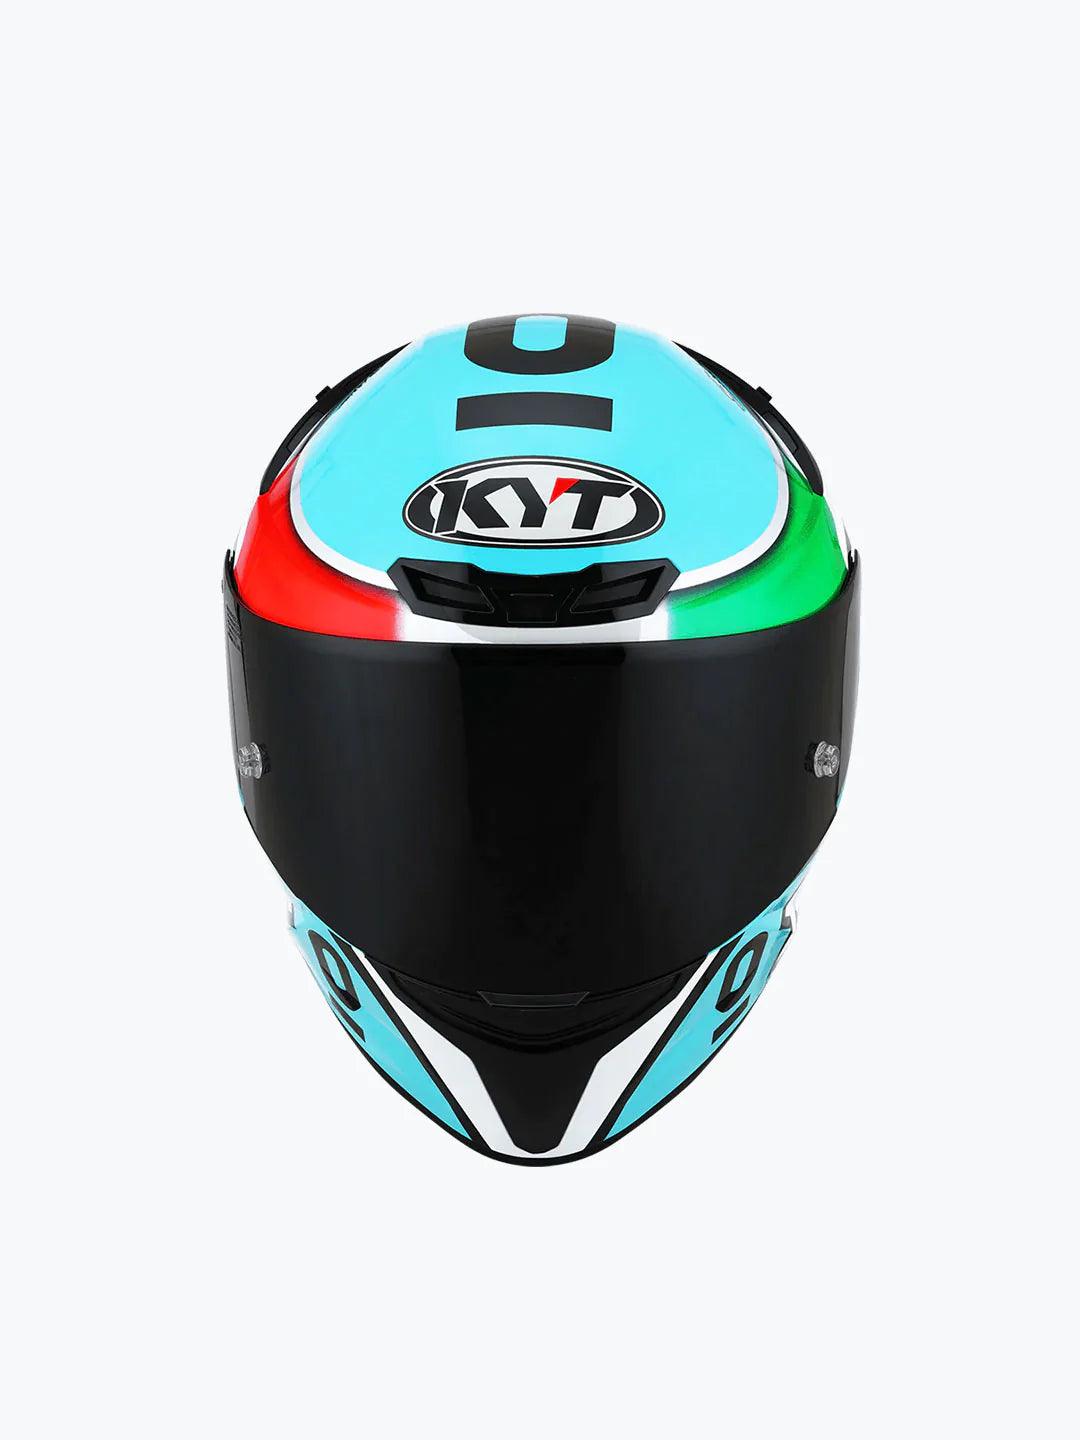 KYT TT Course Leopard Rep. Dallaporta - Moto Modz